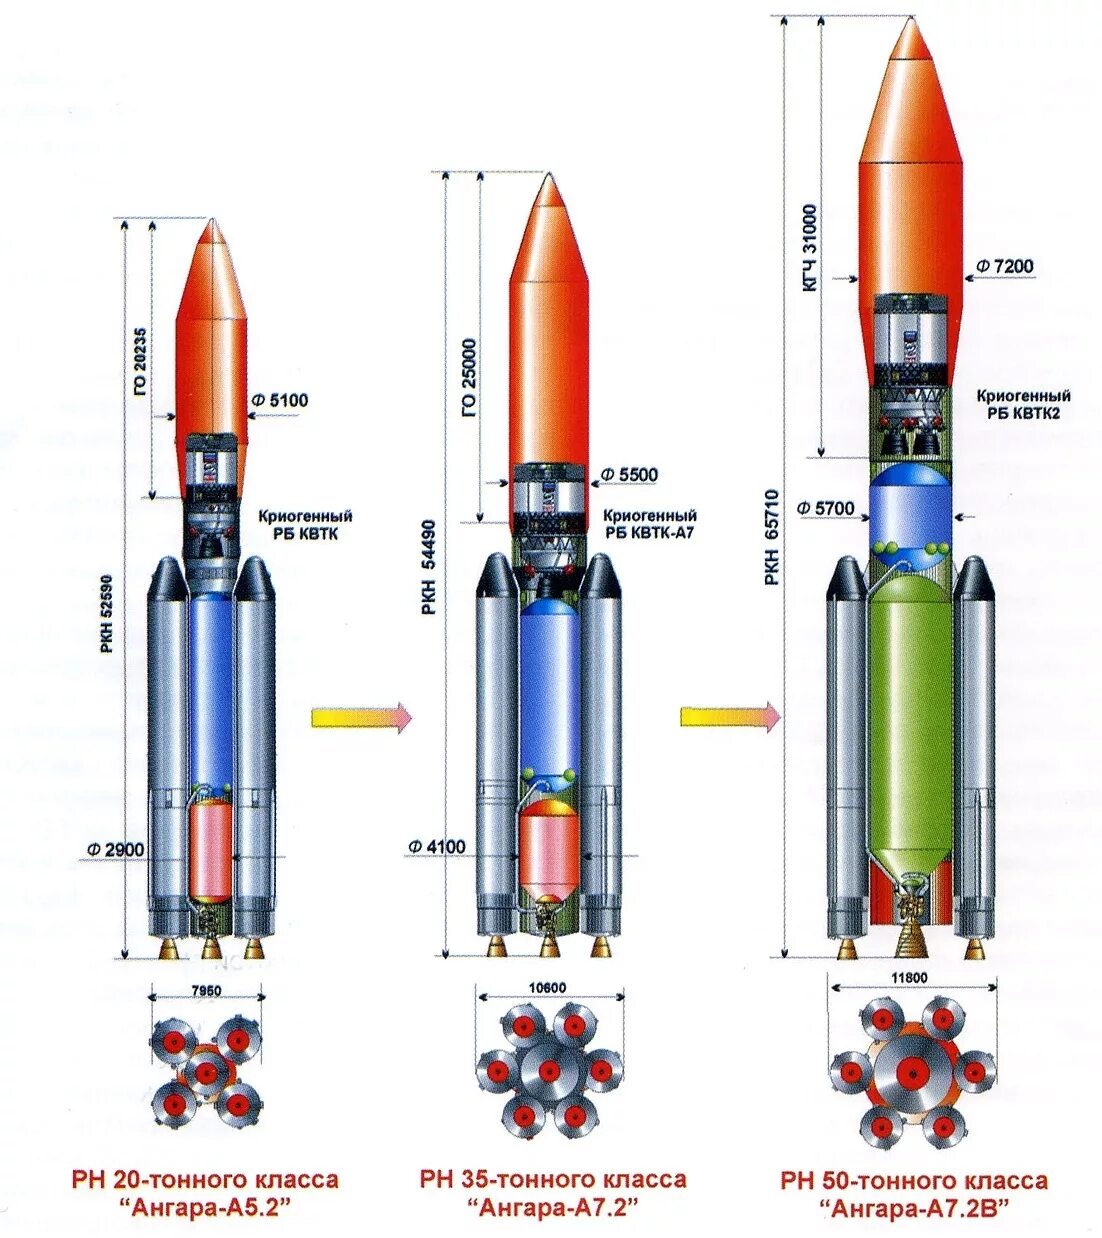 Ангара а5 размеры. Ракета носитель Ангара а5 чертеж. Ракета Ангара а5 чертеж. Ангара-а5 ракета-носитель схема. Ангара 1.2 ракета-носитель чертеж.